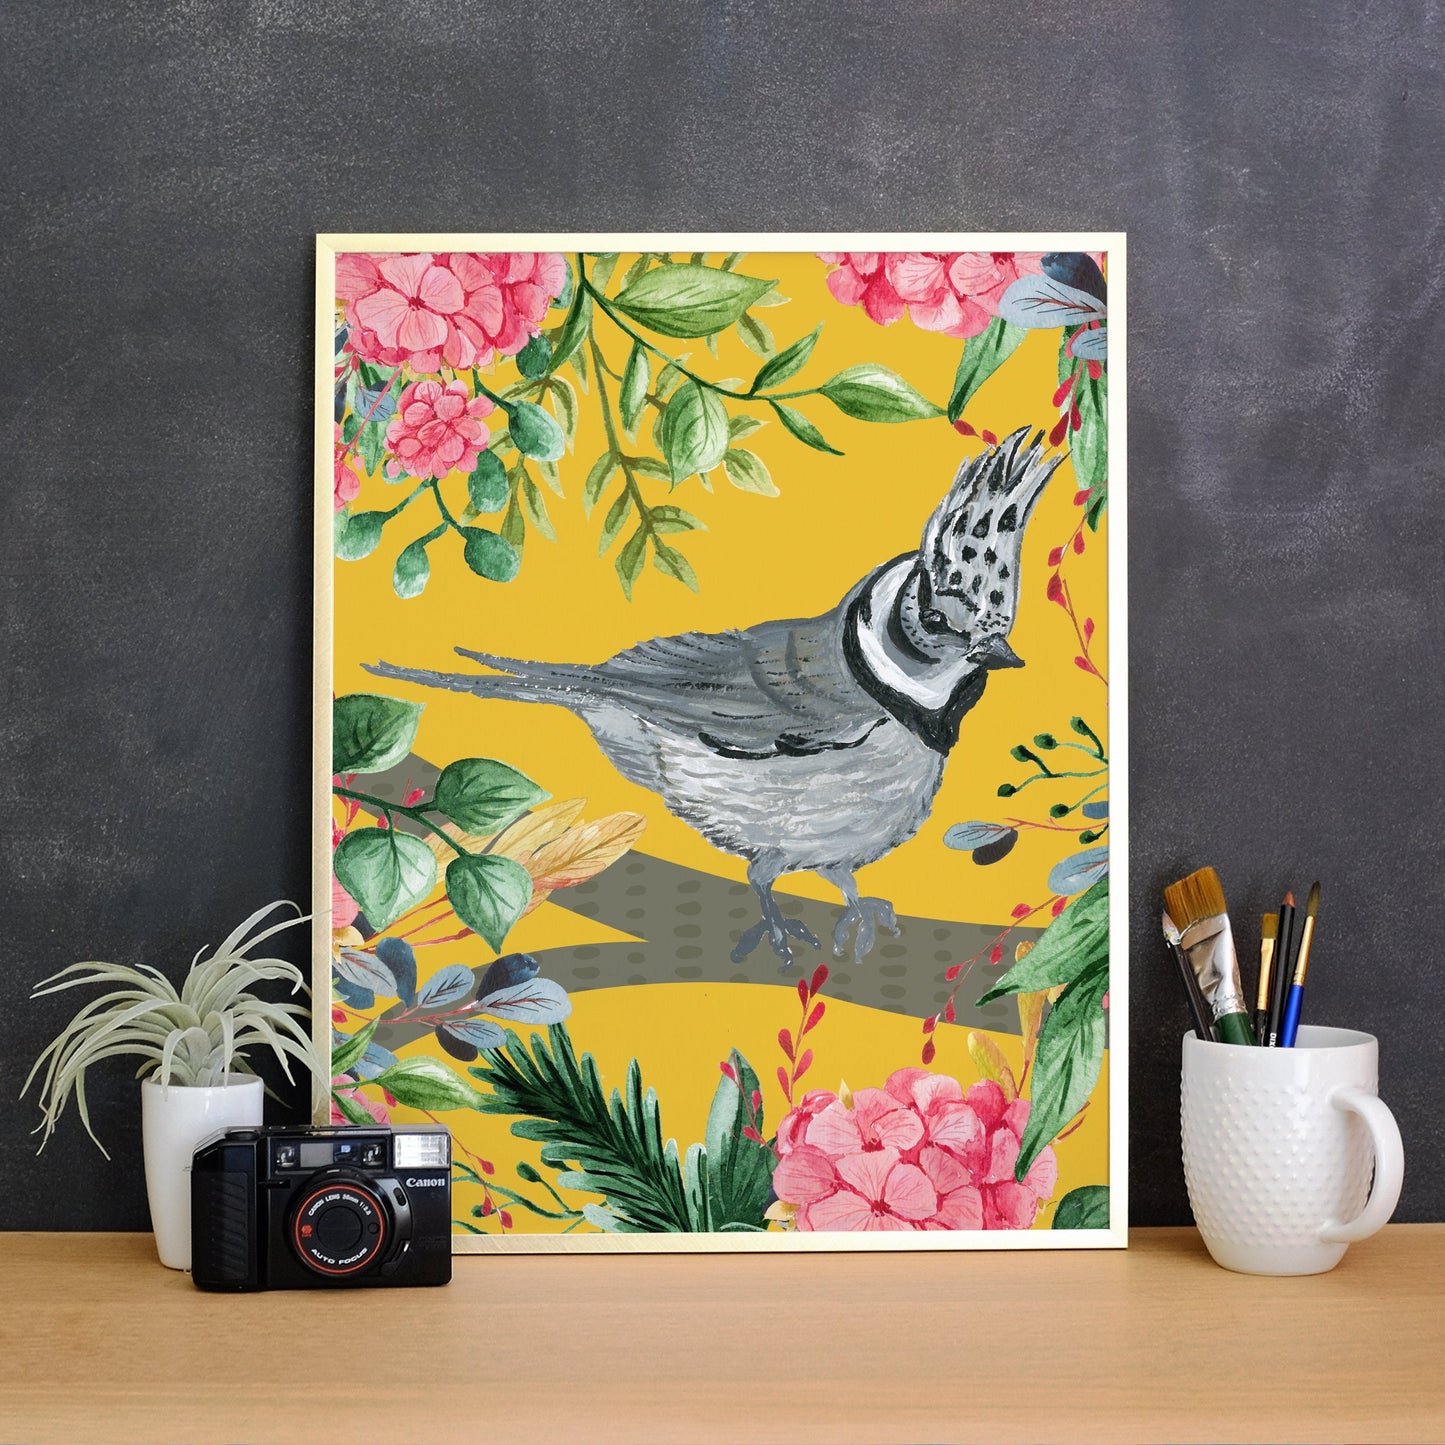 Bird Art Print, Bird Wall Art, North American Bird, animal lovers art, home decor print, Bird Watercolor PaintingArt, Item Code - COTC PR04